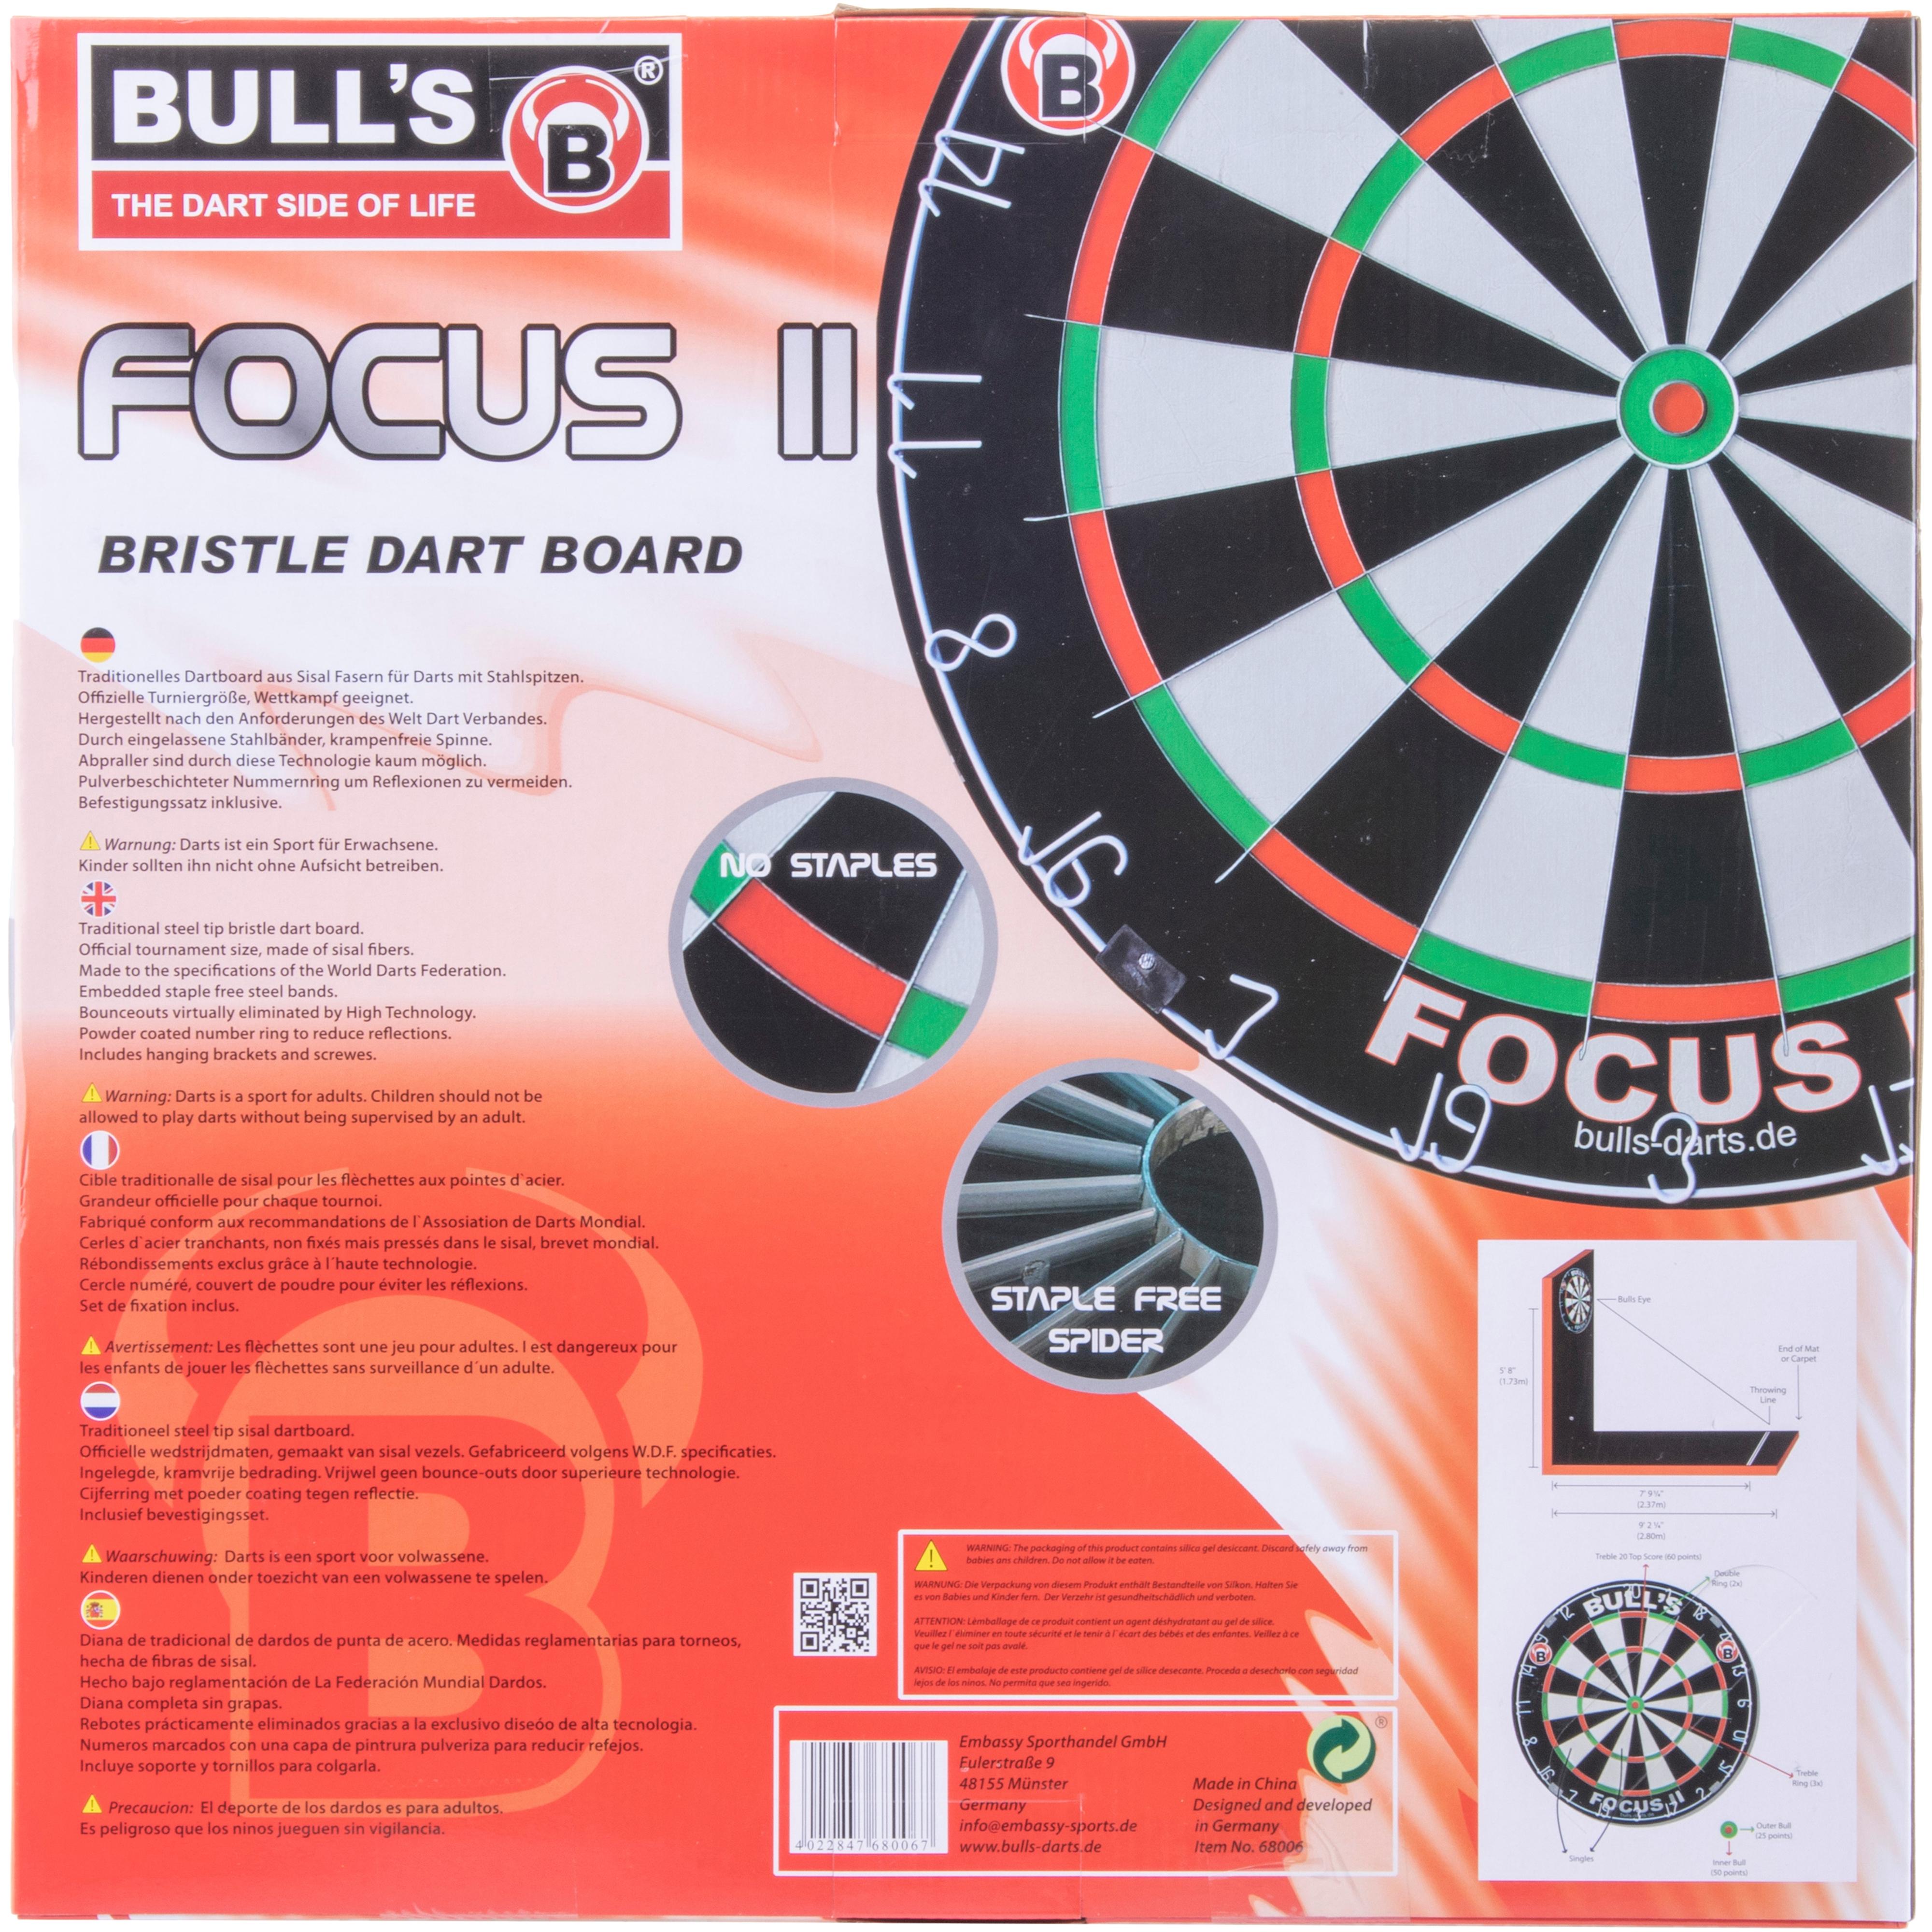 Dartscheibe BULL'S Focus II Bristle Dart Board